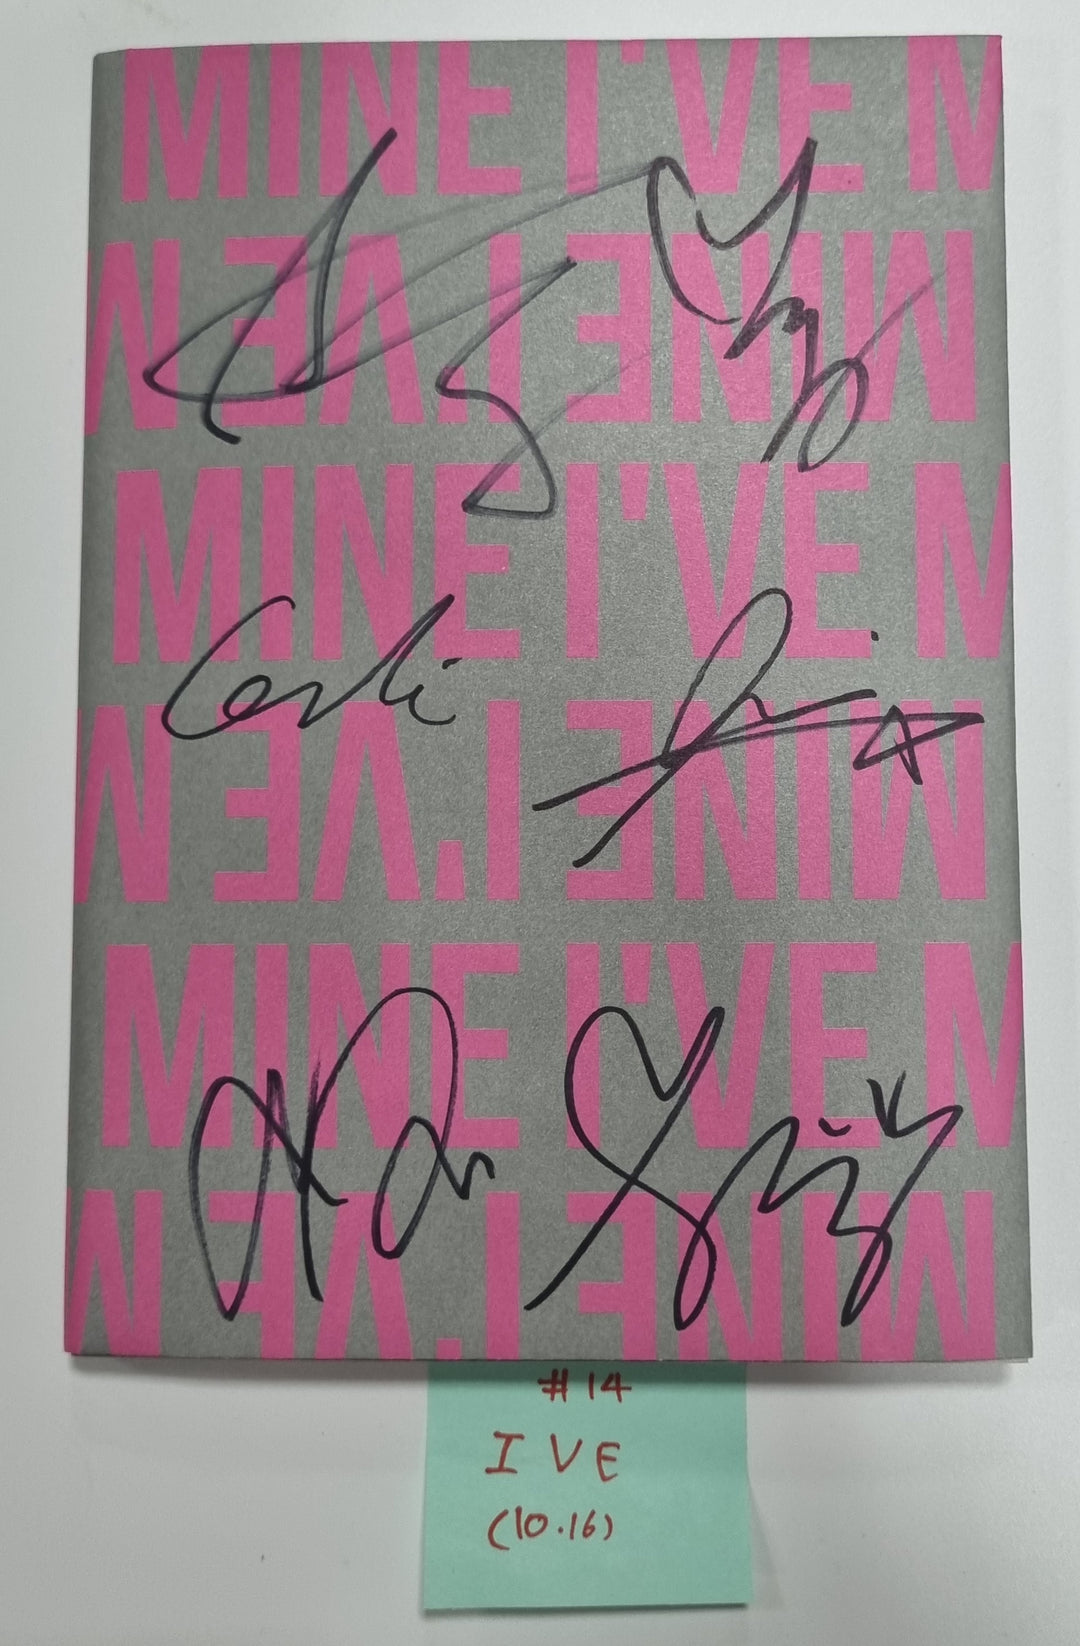 IVE "I've Mine", Loossemble "Loossemble", TripleS "EVOLution", JINI "AIHIAVG" - Hand Autographed(Signed) Promo Album [23.10.16]